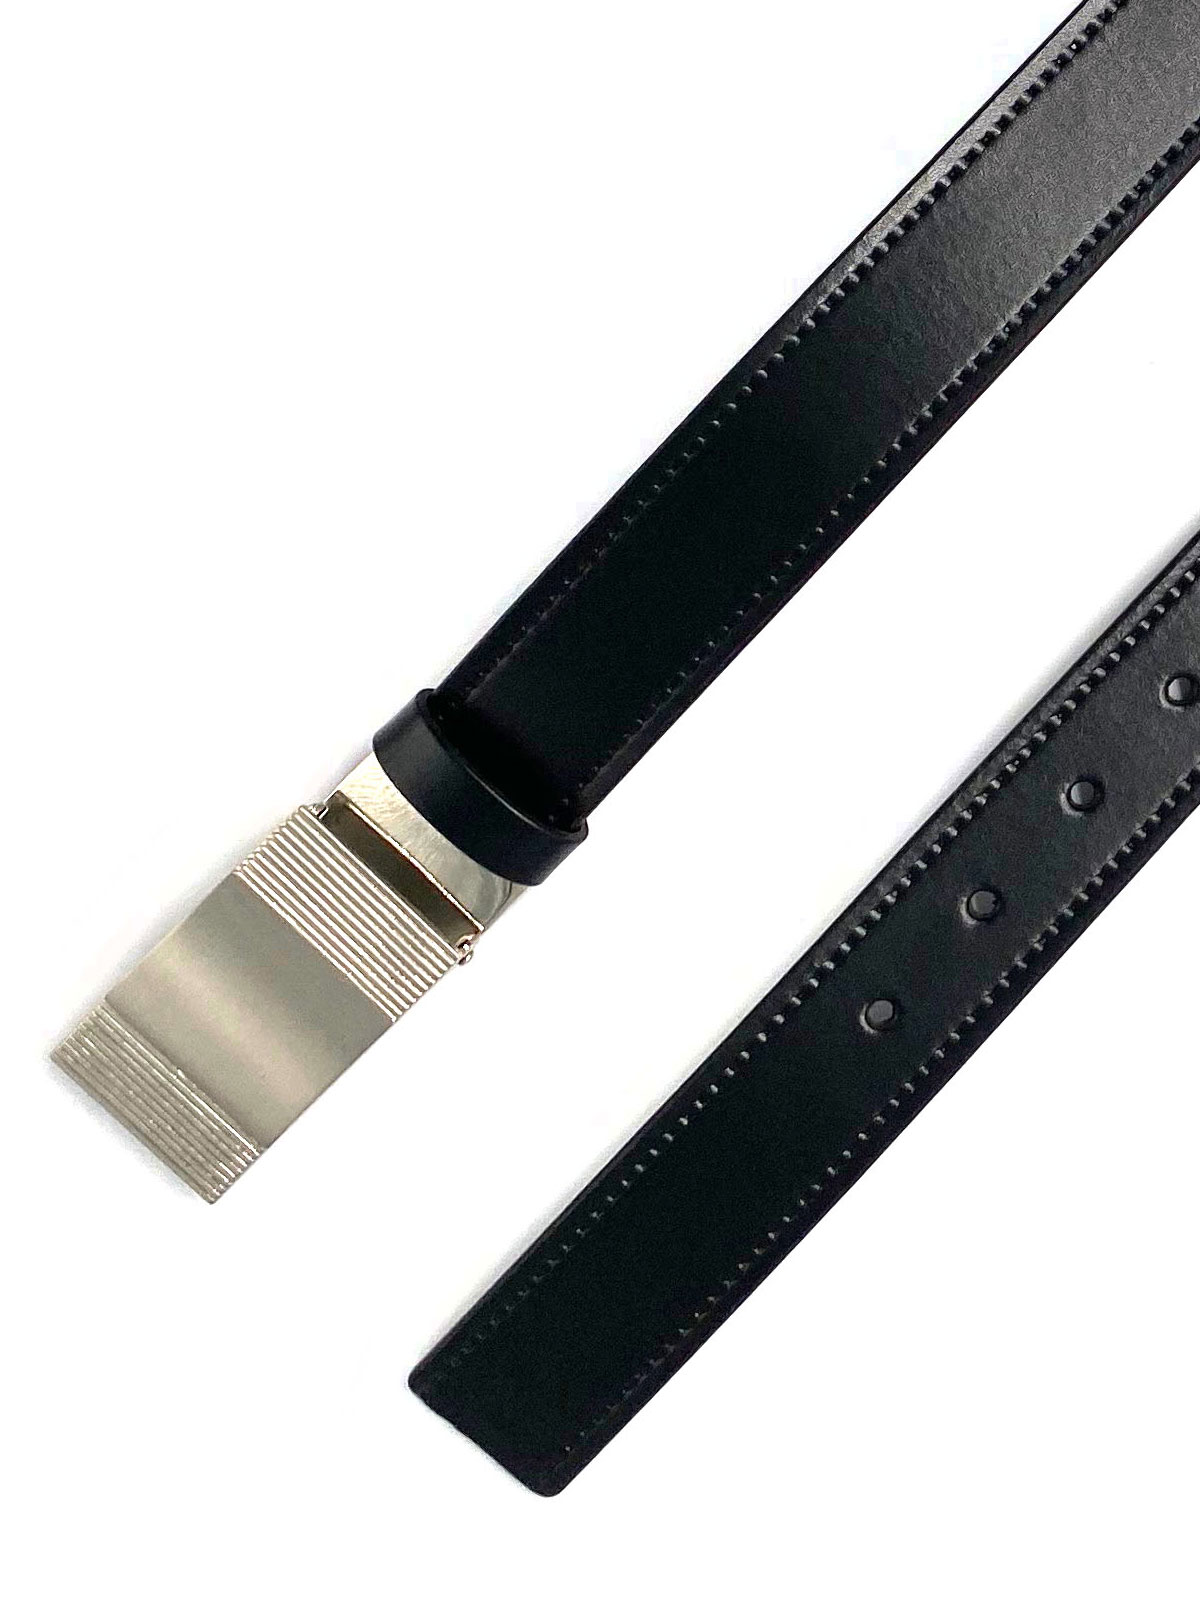 Black belt with metal plate - 10444 - € 10.12 img3